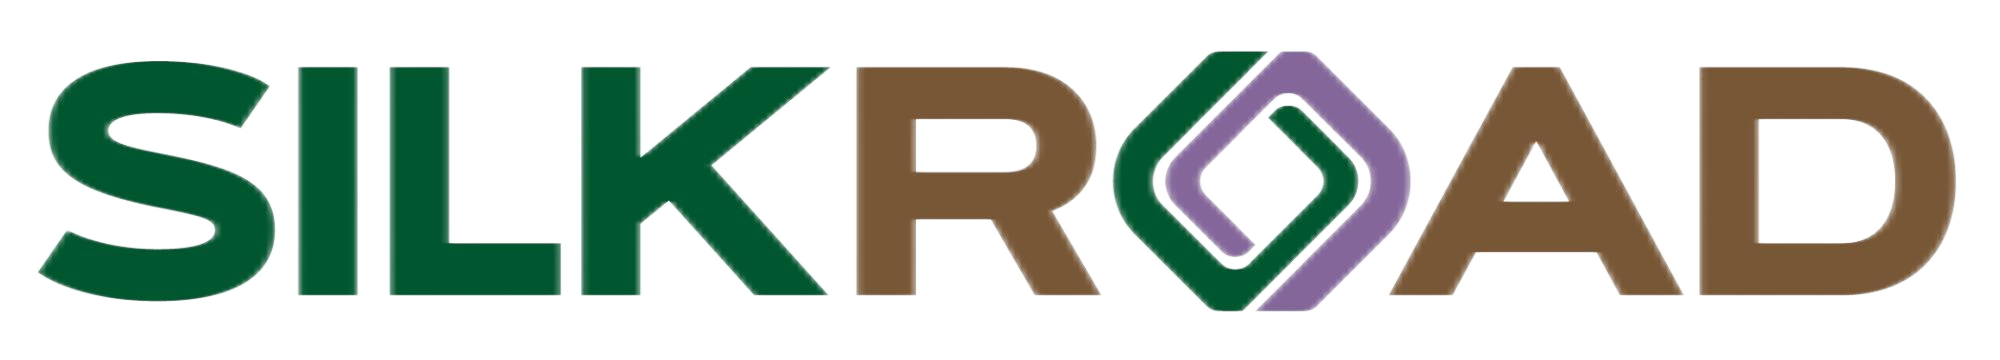 SSRIS Logo.png